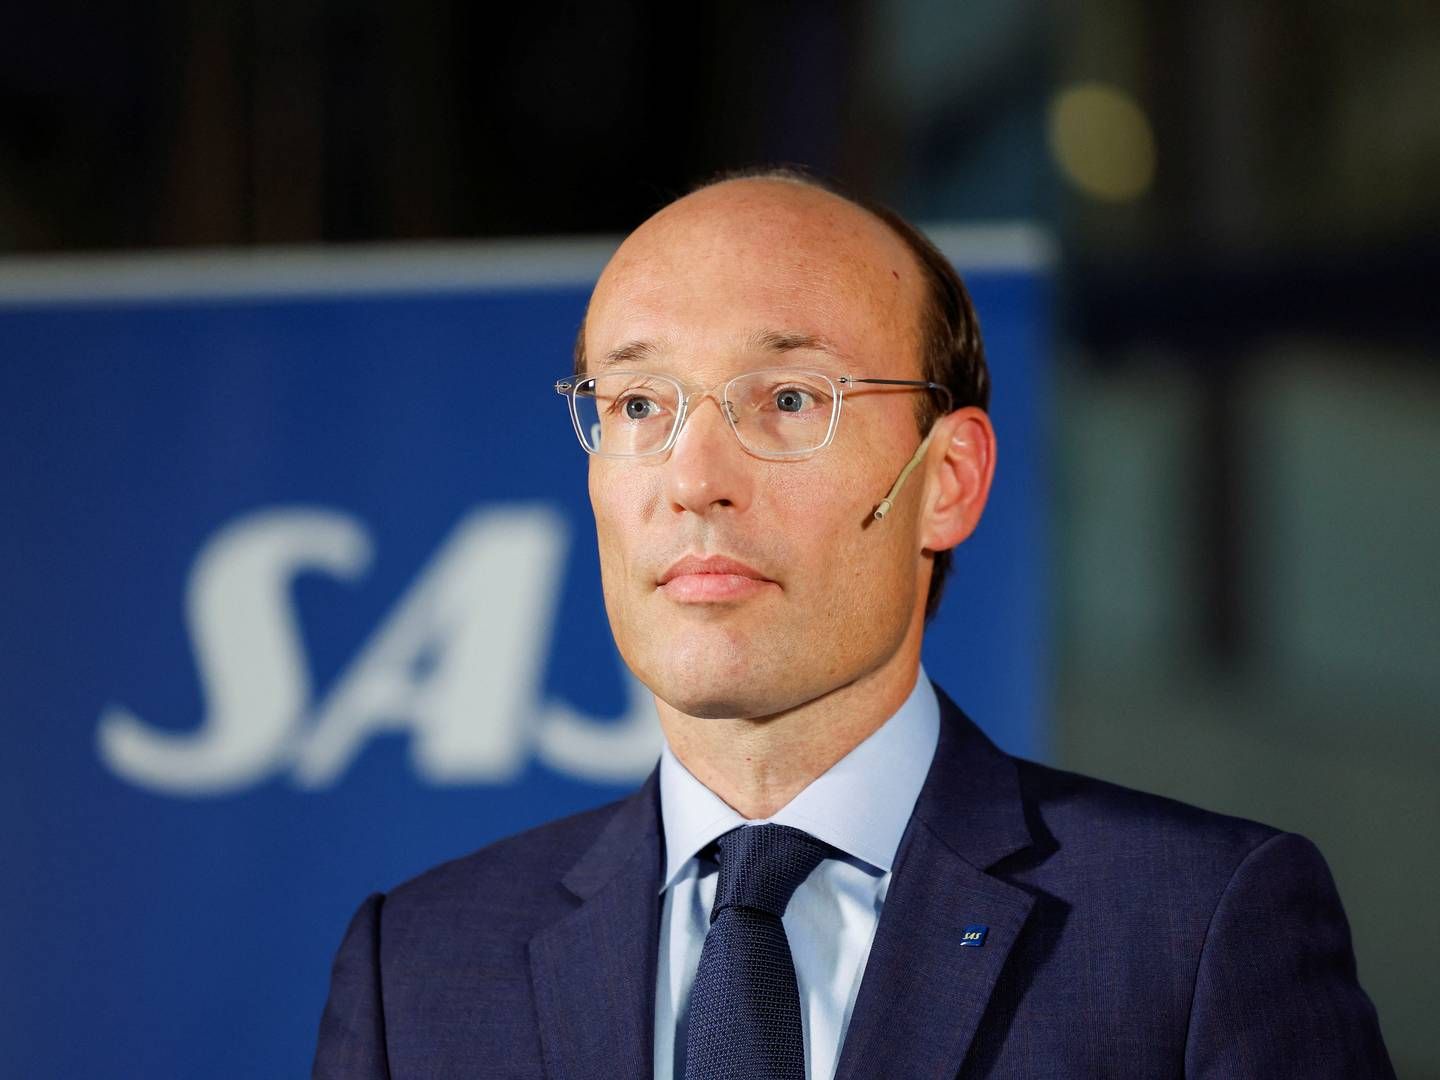 Anko van der Werff er adm. direktør i SAS. | Foto: TT News Agency/Reuters/Ritzau Scanpix